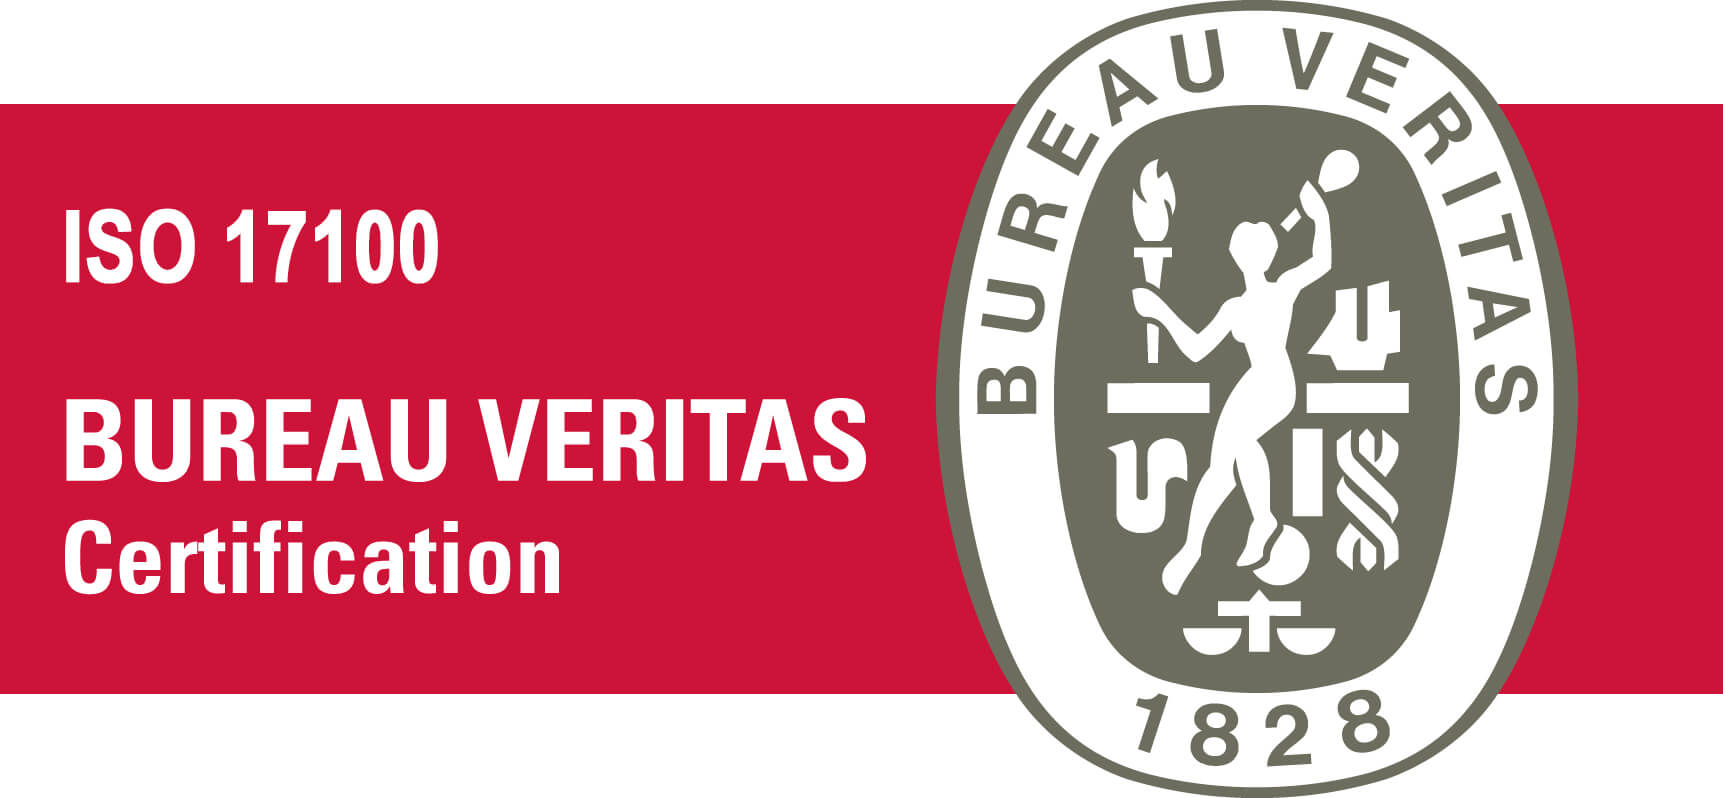 CERTIFICATION BUREAU VERITAS - ISO 17100